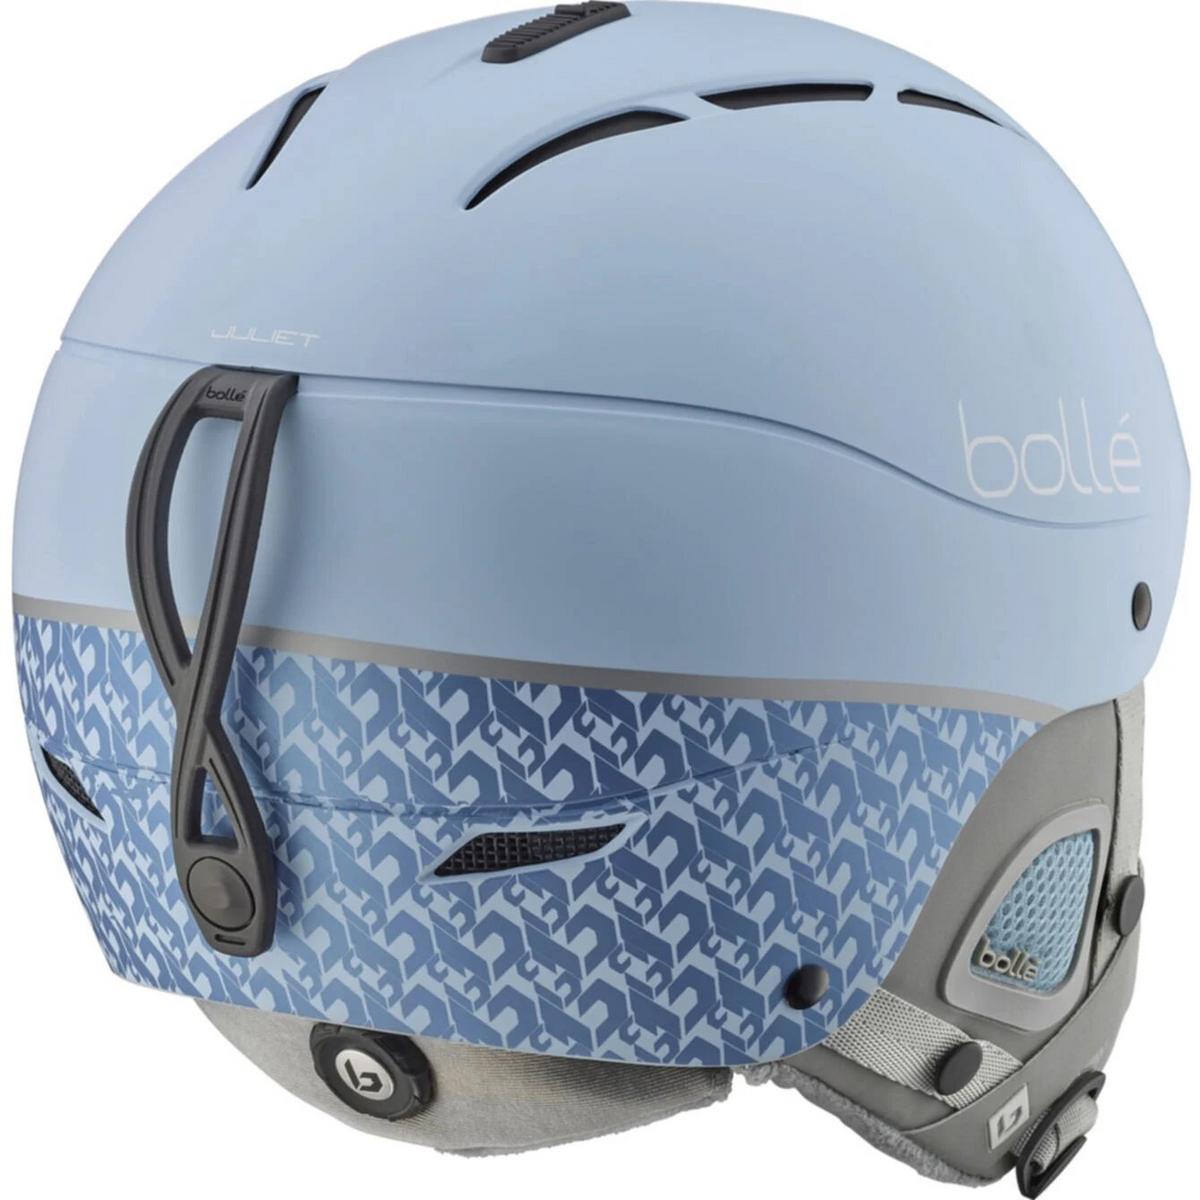 Bolle Women's Juliet Helmet - Powder Blue Matte